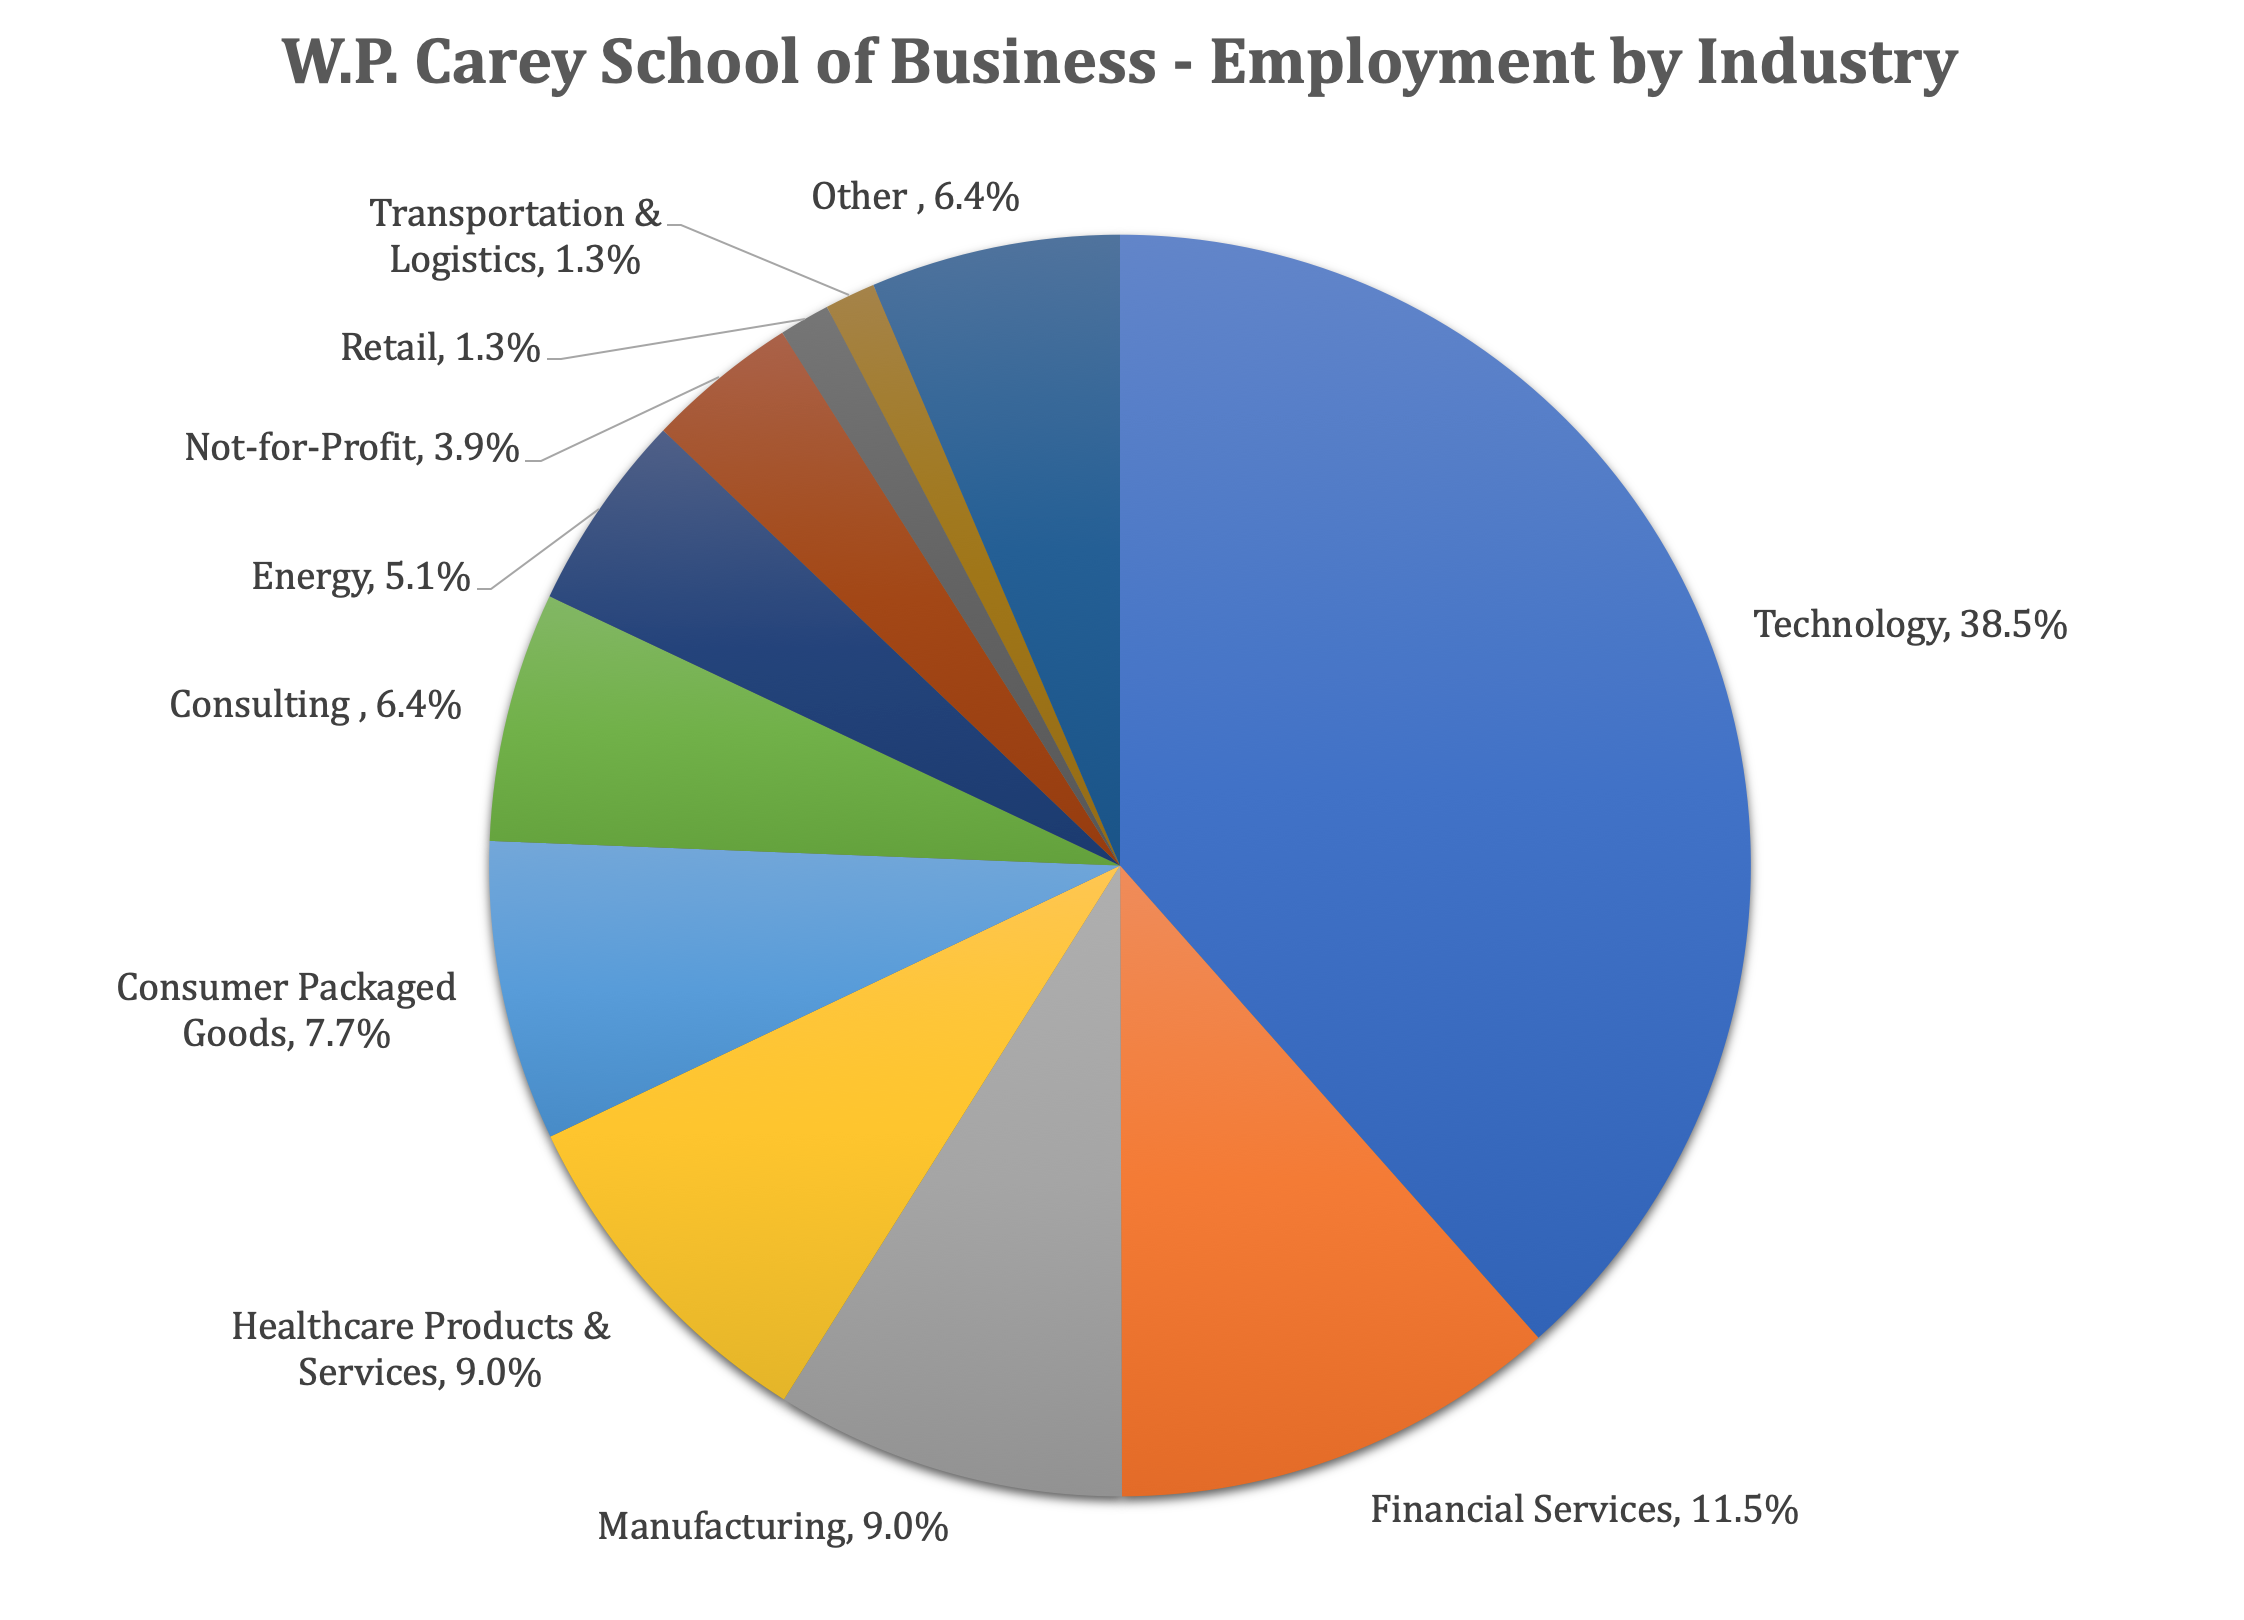 ASU MBA Program - W.P. Carey School of Business - Employment by Industry